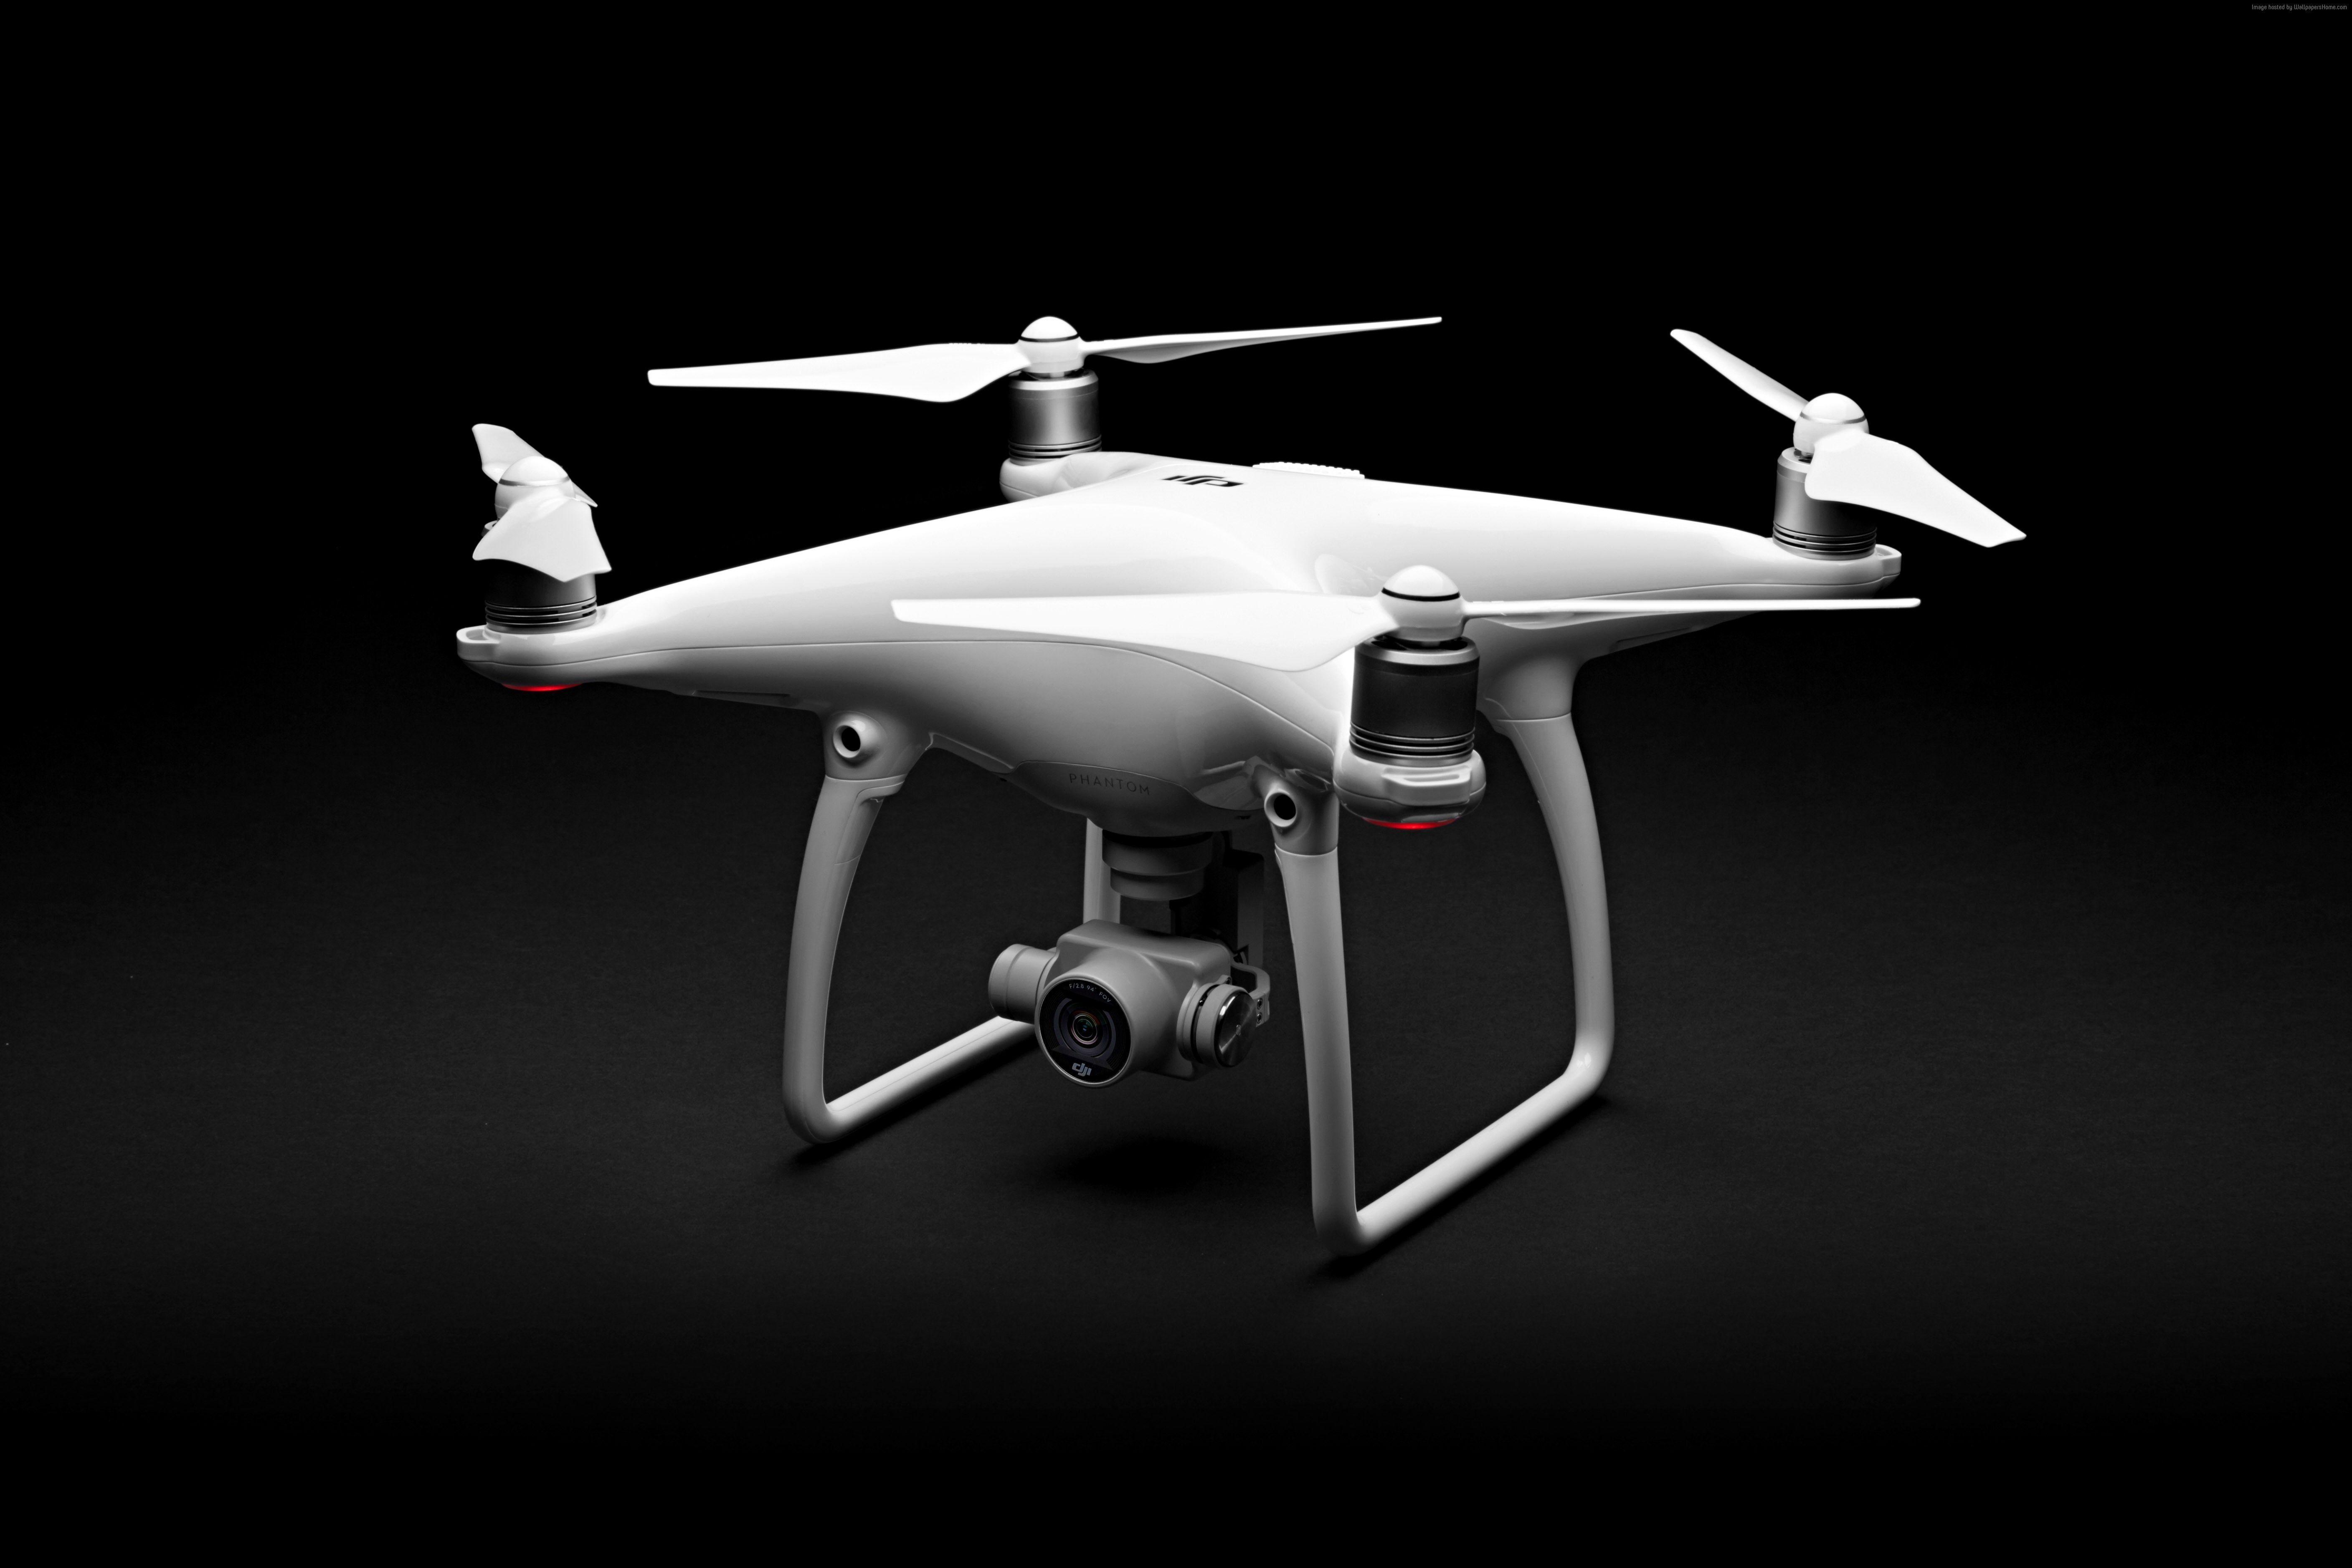 DJI Phantom 4 Wallpaper, Hi Tech: DJI Phantom Drone, Quadcopter